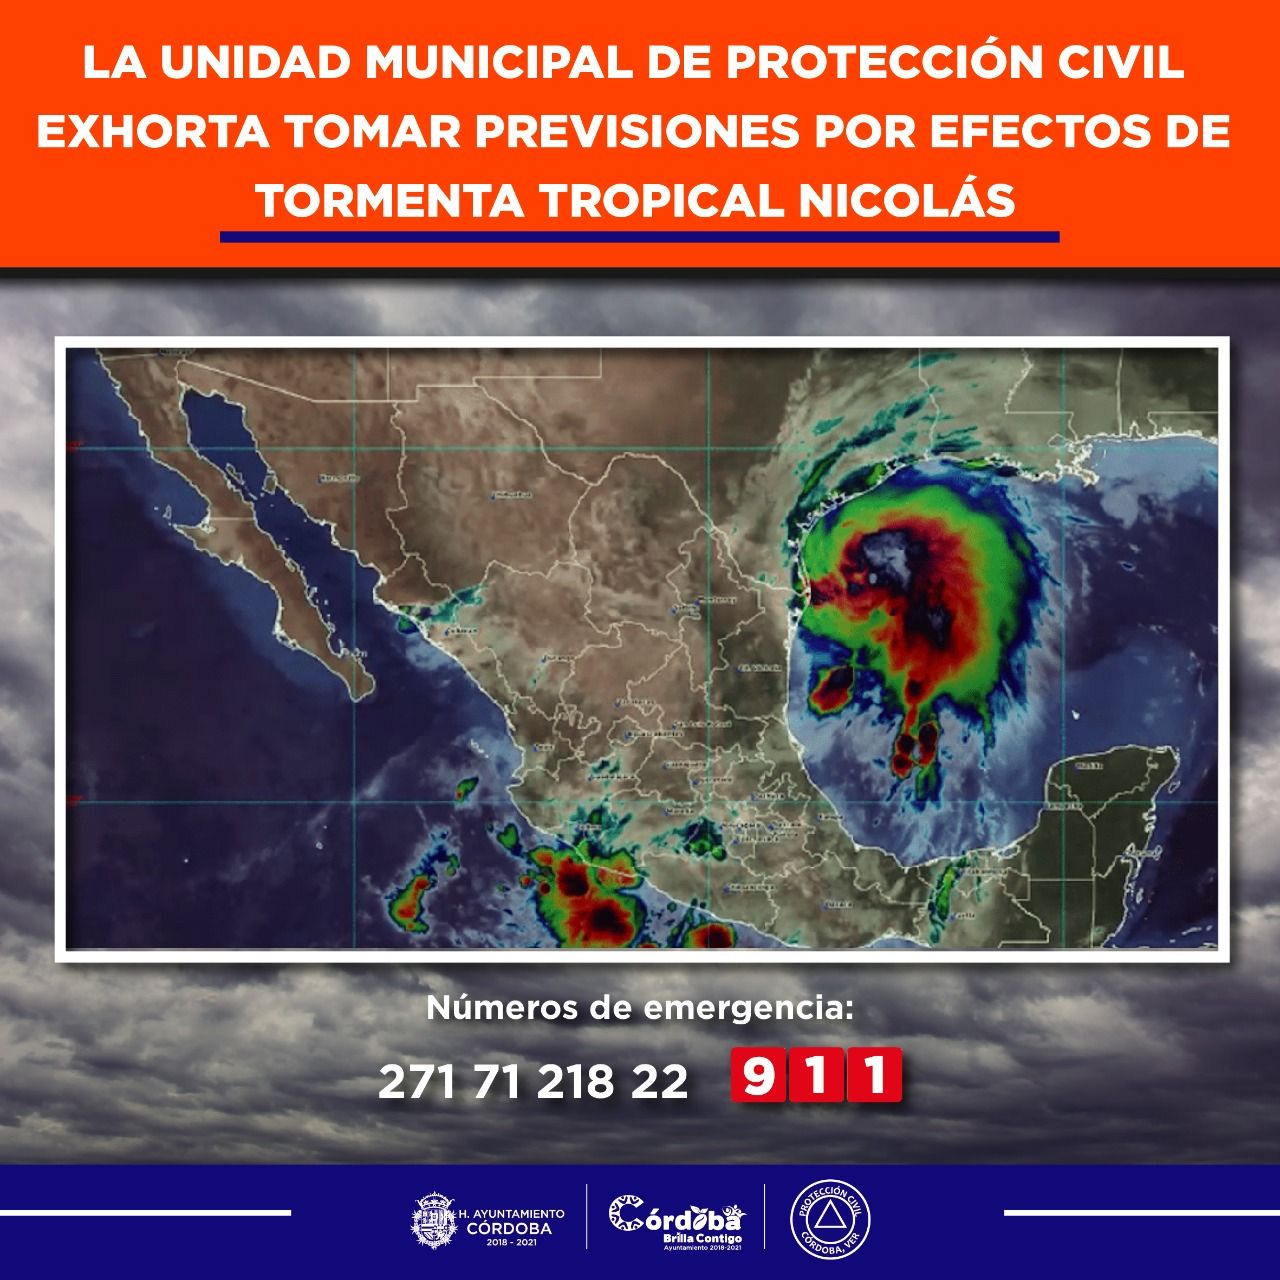 UMPC Córdoba exhorta tomar previsiones por efectos de tormenta tropical Nicholas
